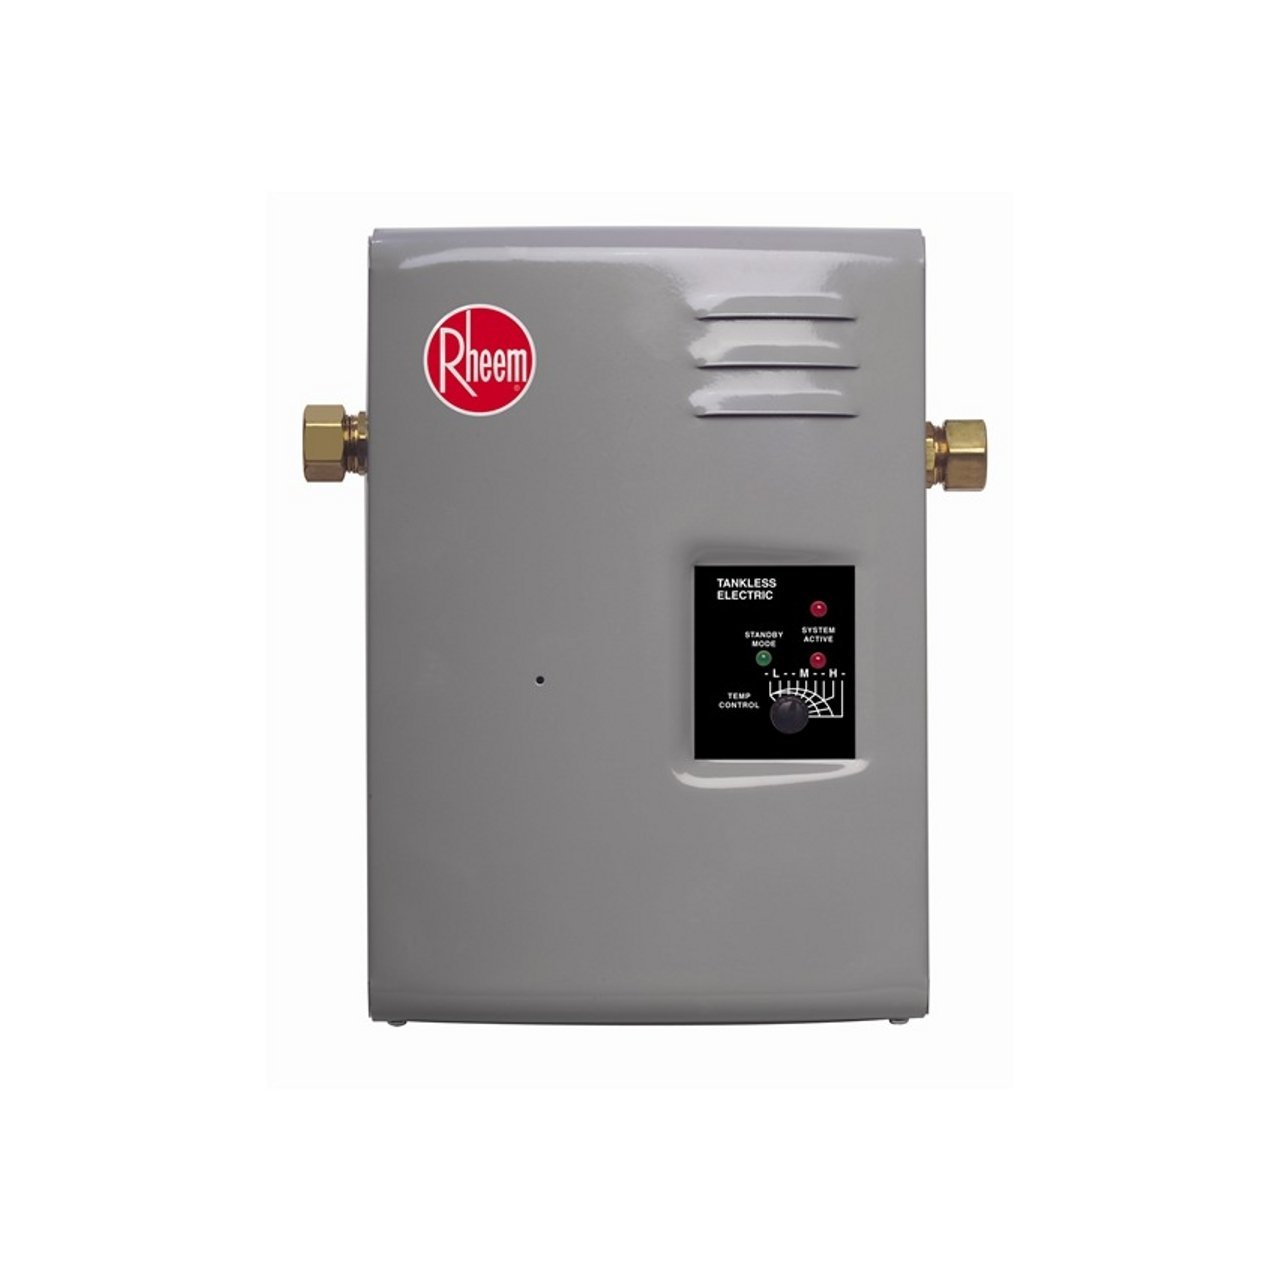 Rheem RTE 9 Electric Tankless Water Heater 3 GPM